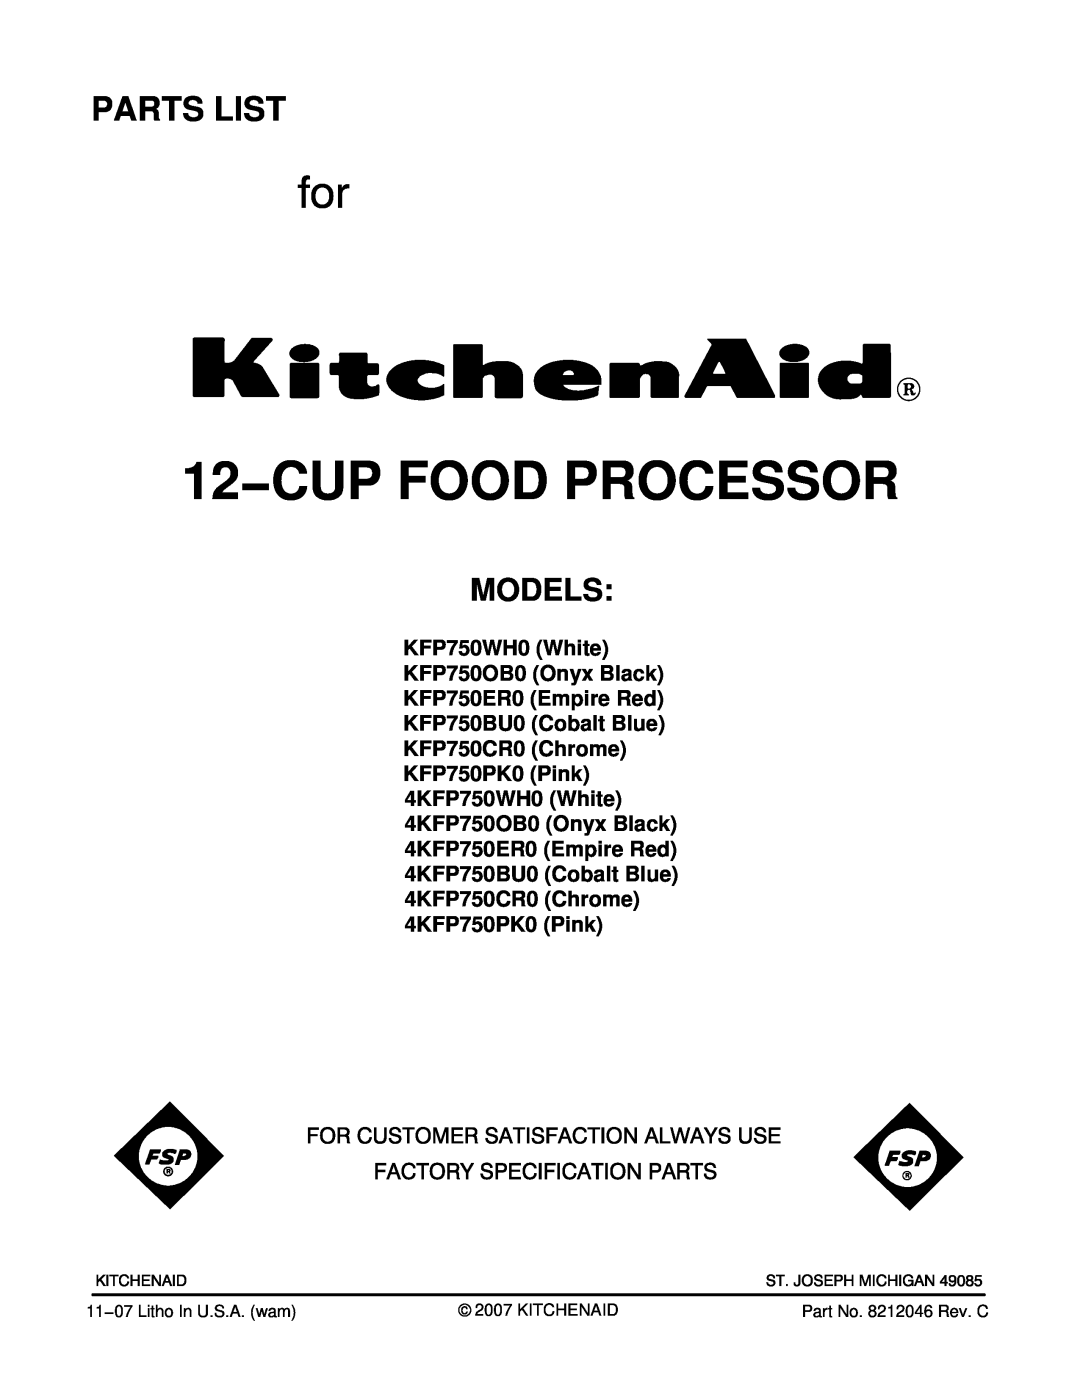 KitchenAid KFP750CR0, KFP750BU0, KFP750ER0 manual Models, 12−CUP FOOD PROCESSOR, Parts List, Part No. 8212046 Rev. C 